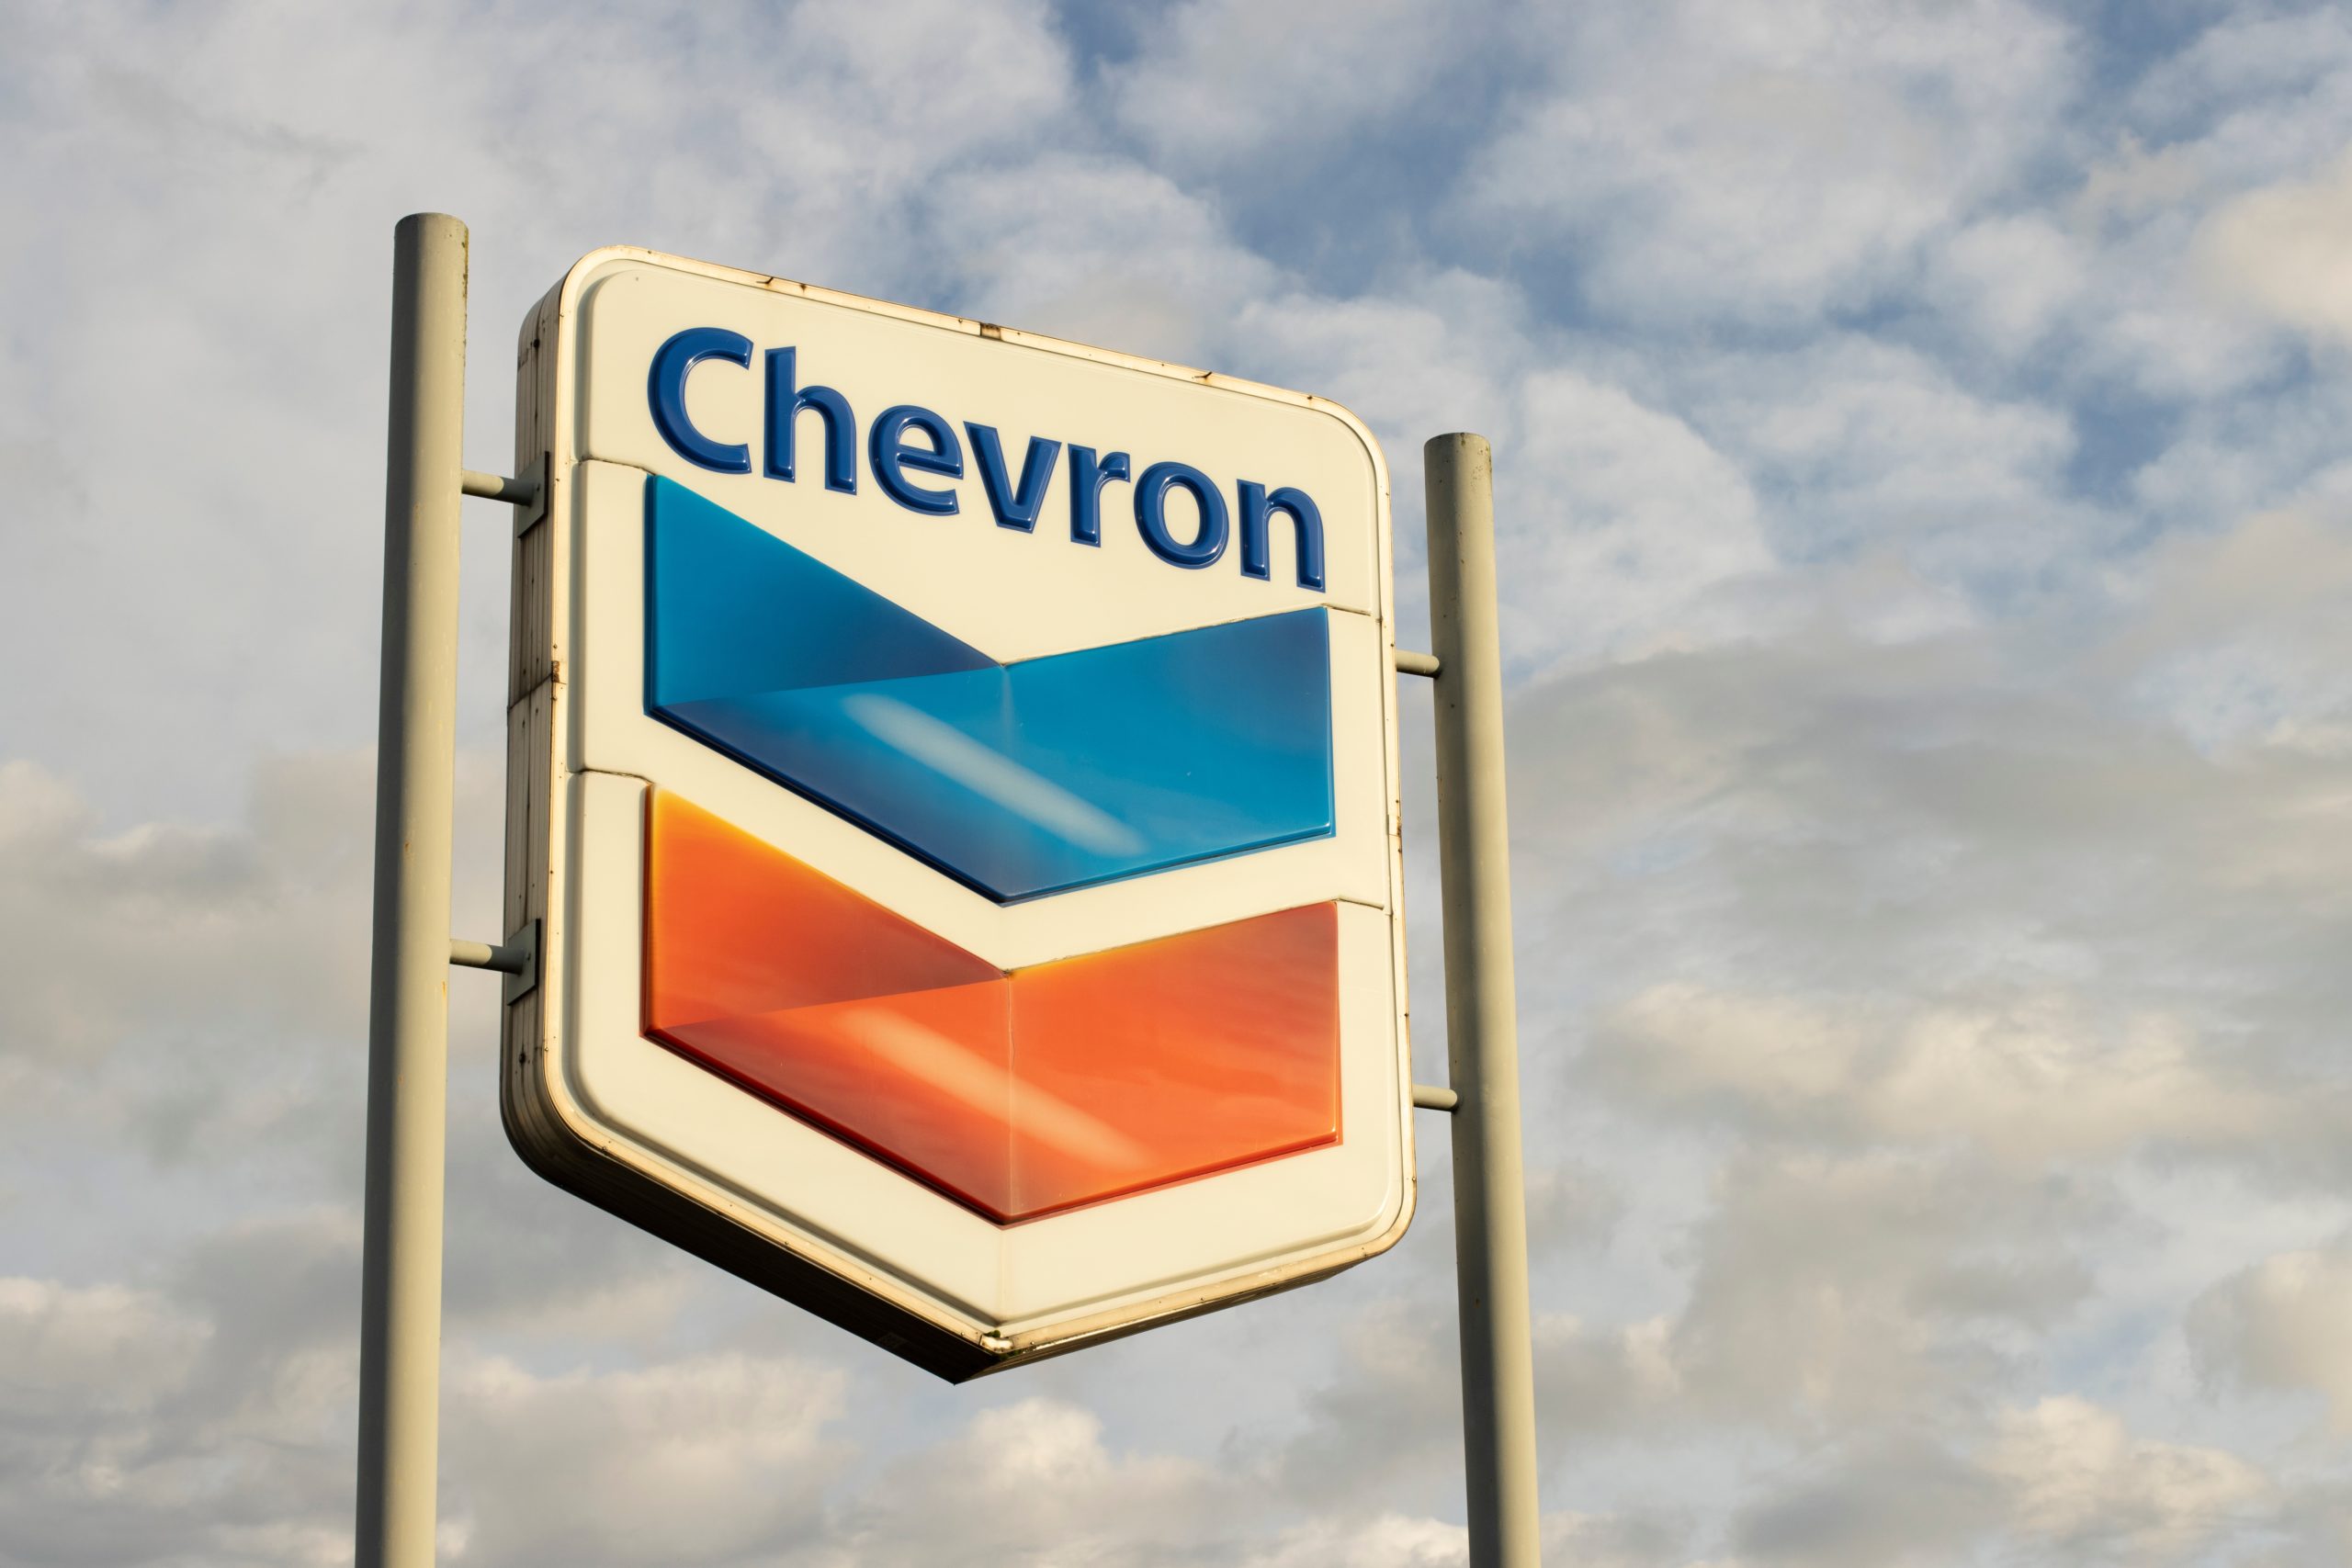 Chevron Sign